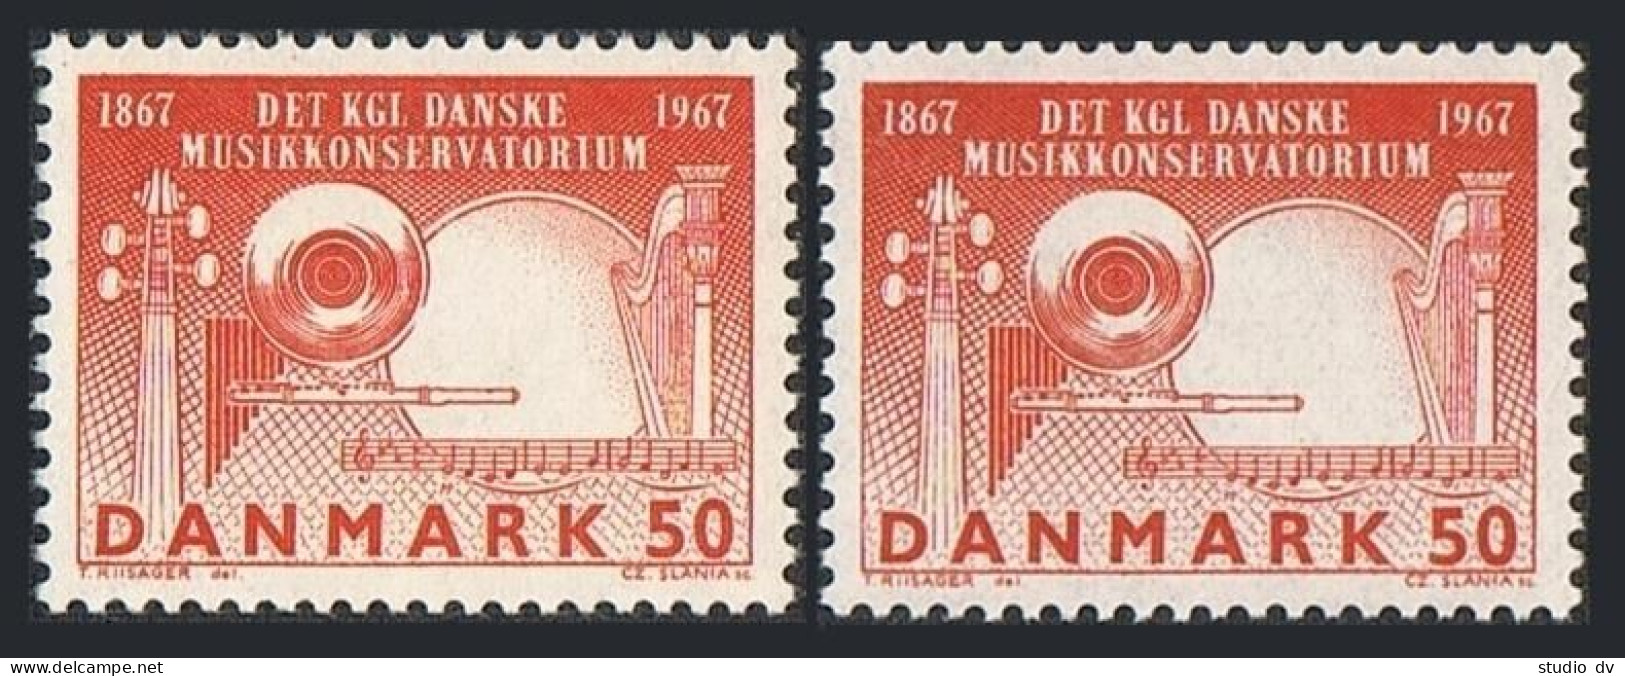 Denmark 430 Two Var, MNH. Michel 449x-449y. Royal Danish Academy Of Music, 1967. - Neufs